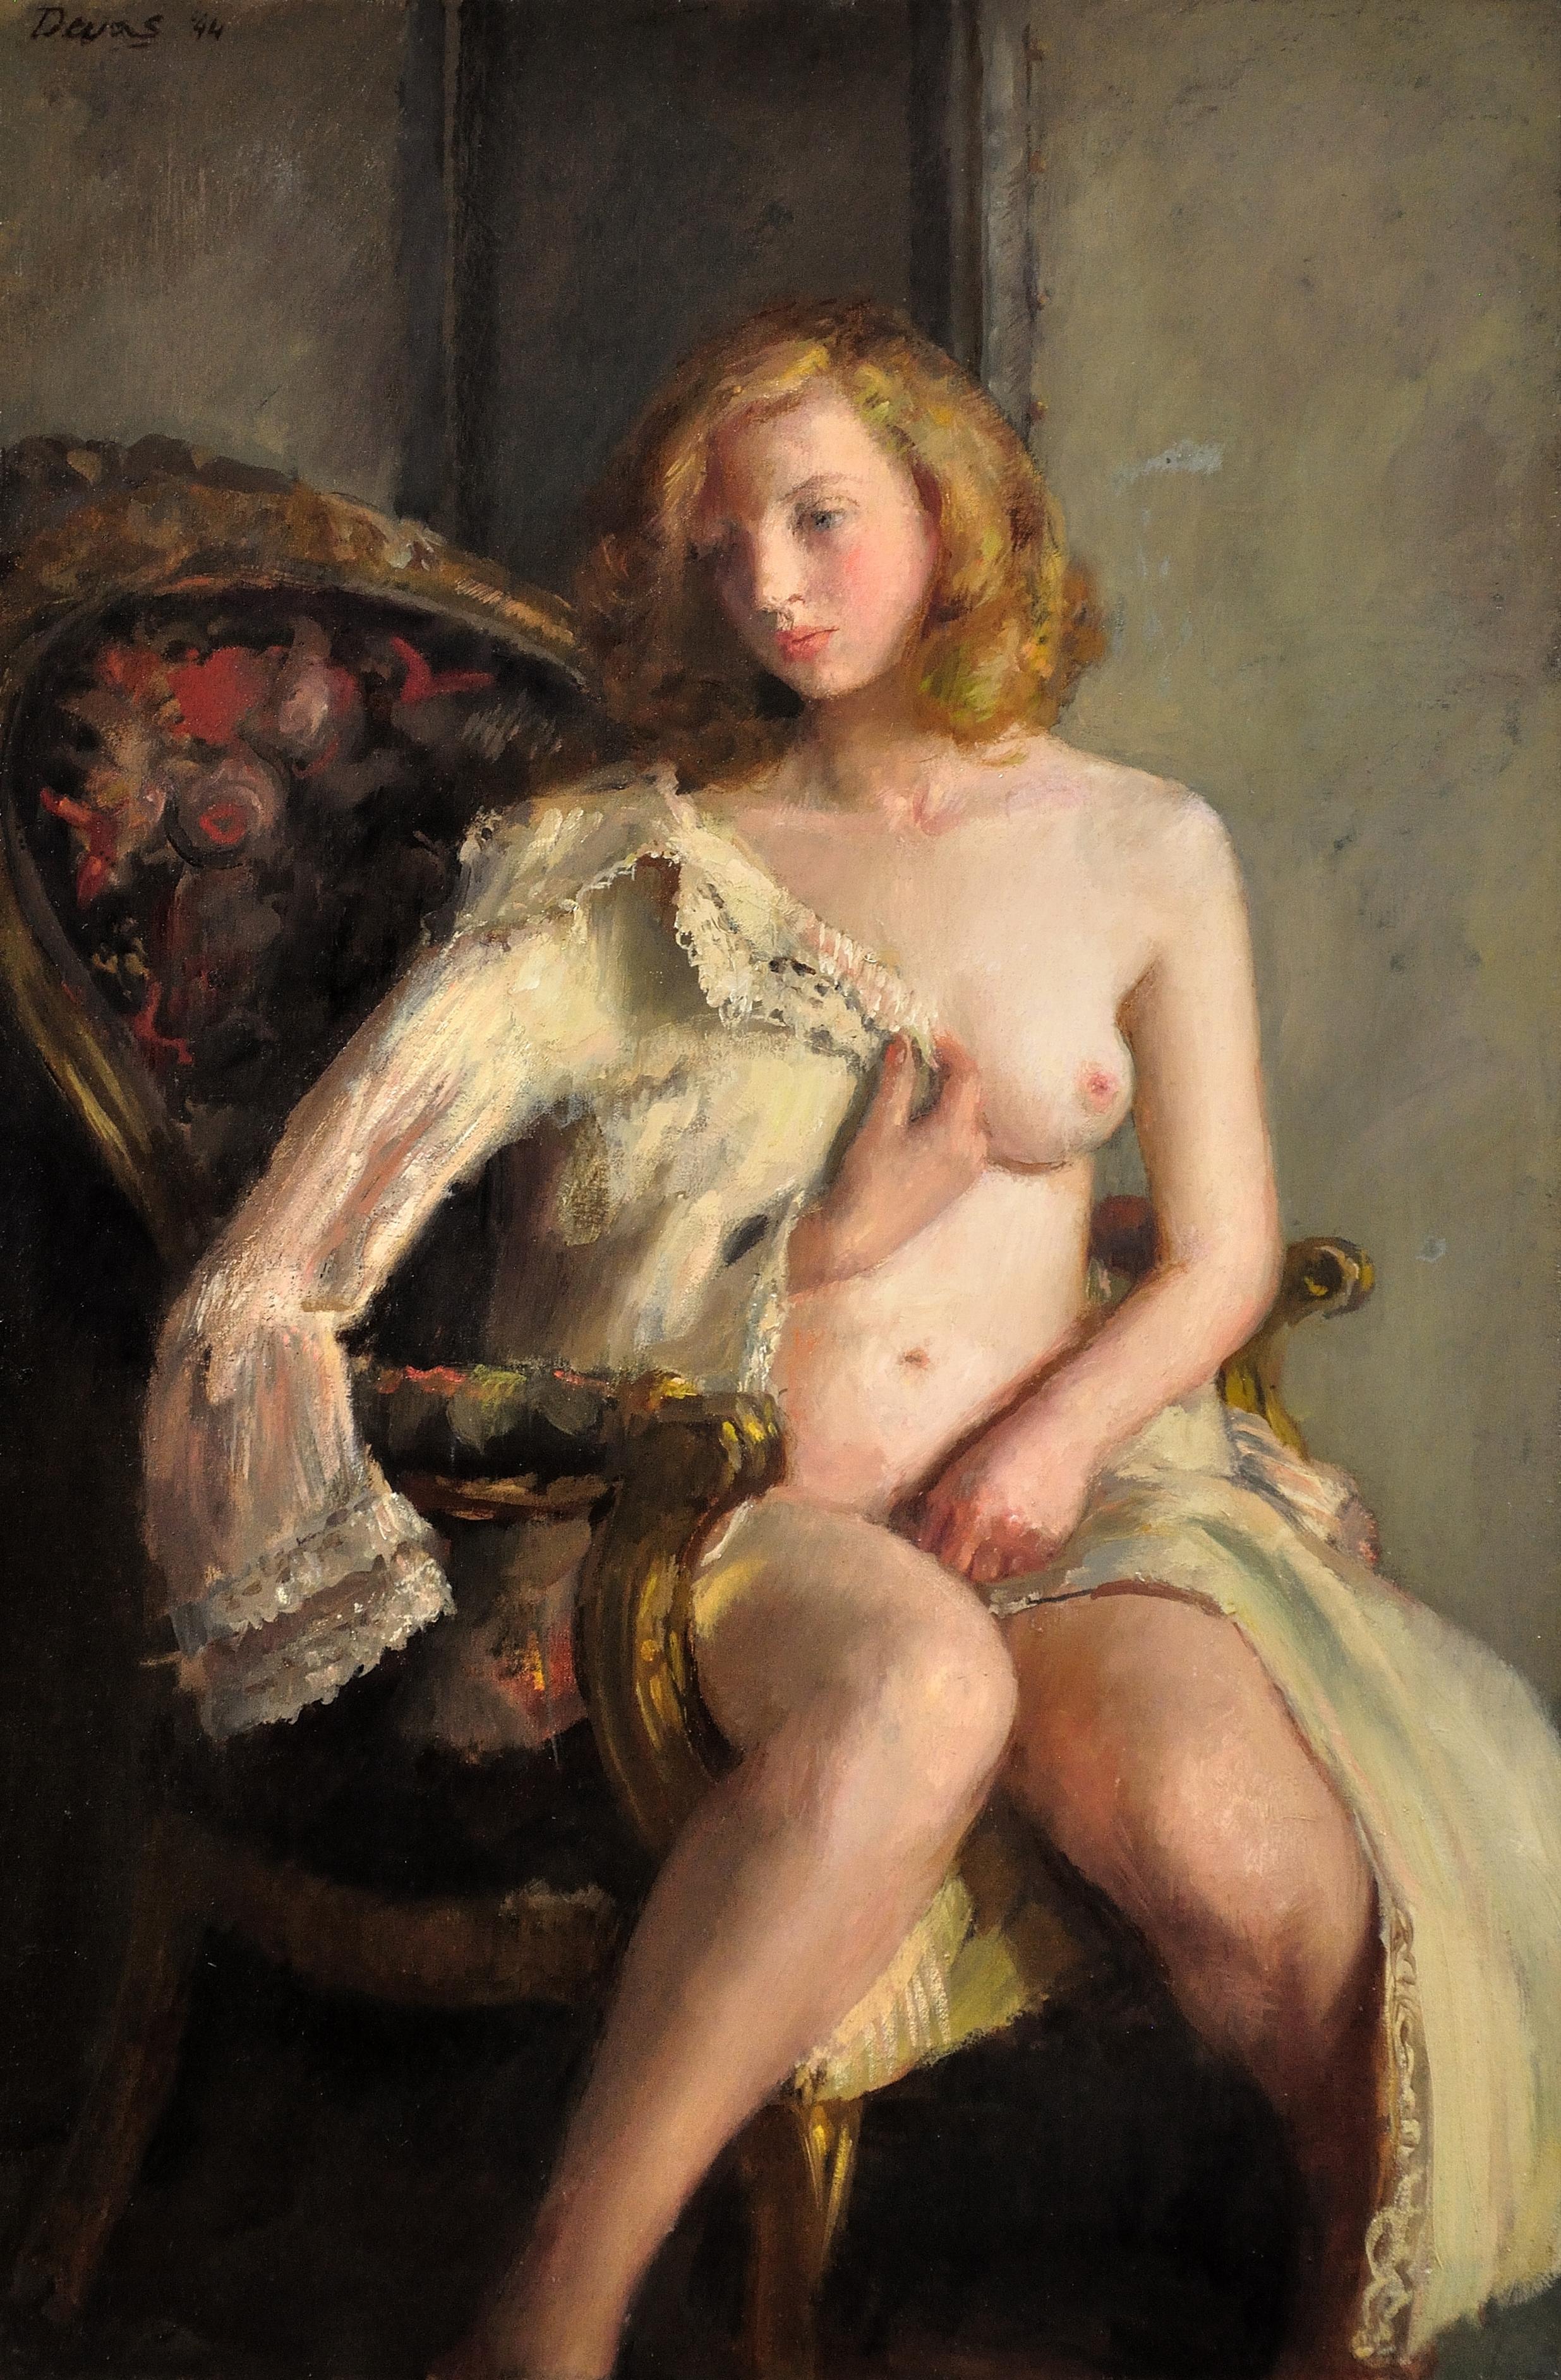 Anthony Devas Nude Painting - Déshabillée. Female Redhead Nude. Original Oil Painting. WWII Painting. 1944